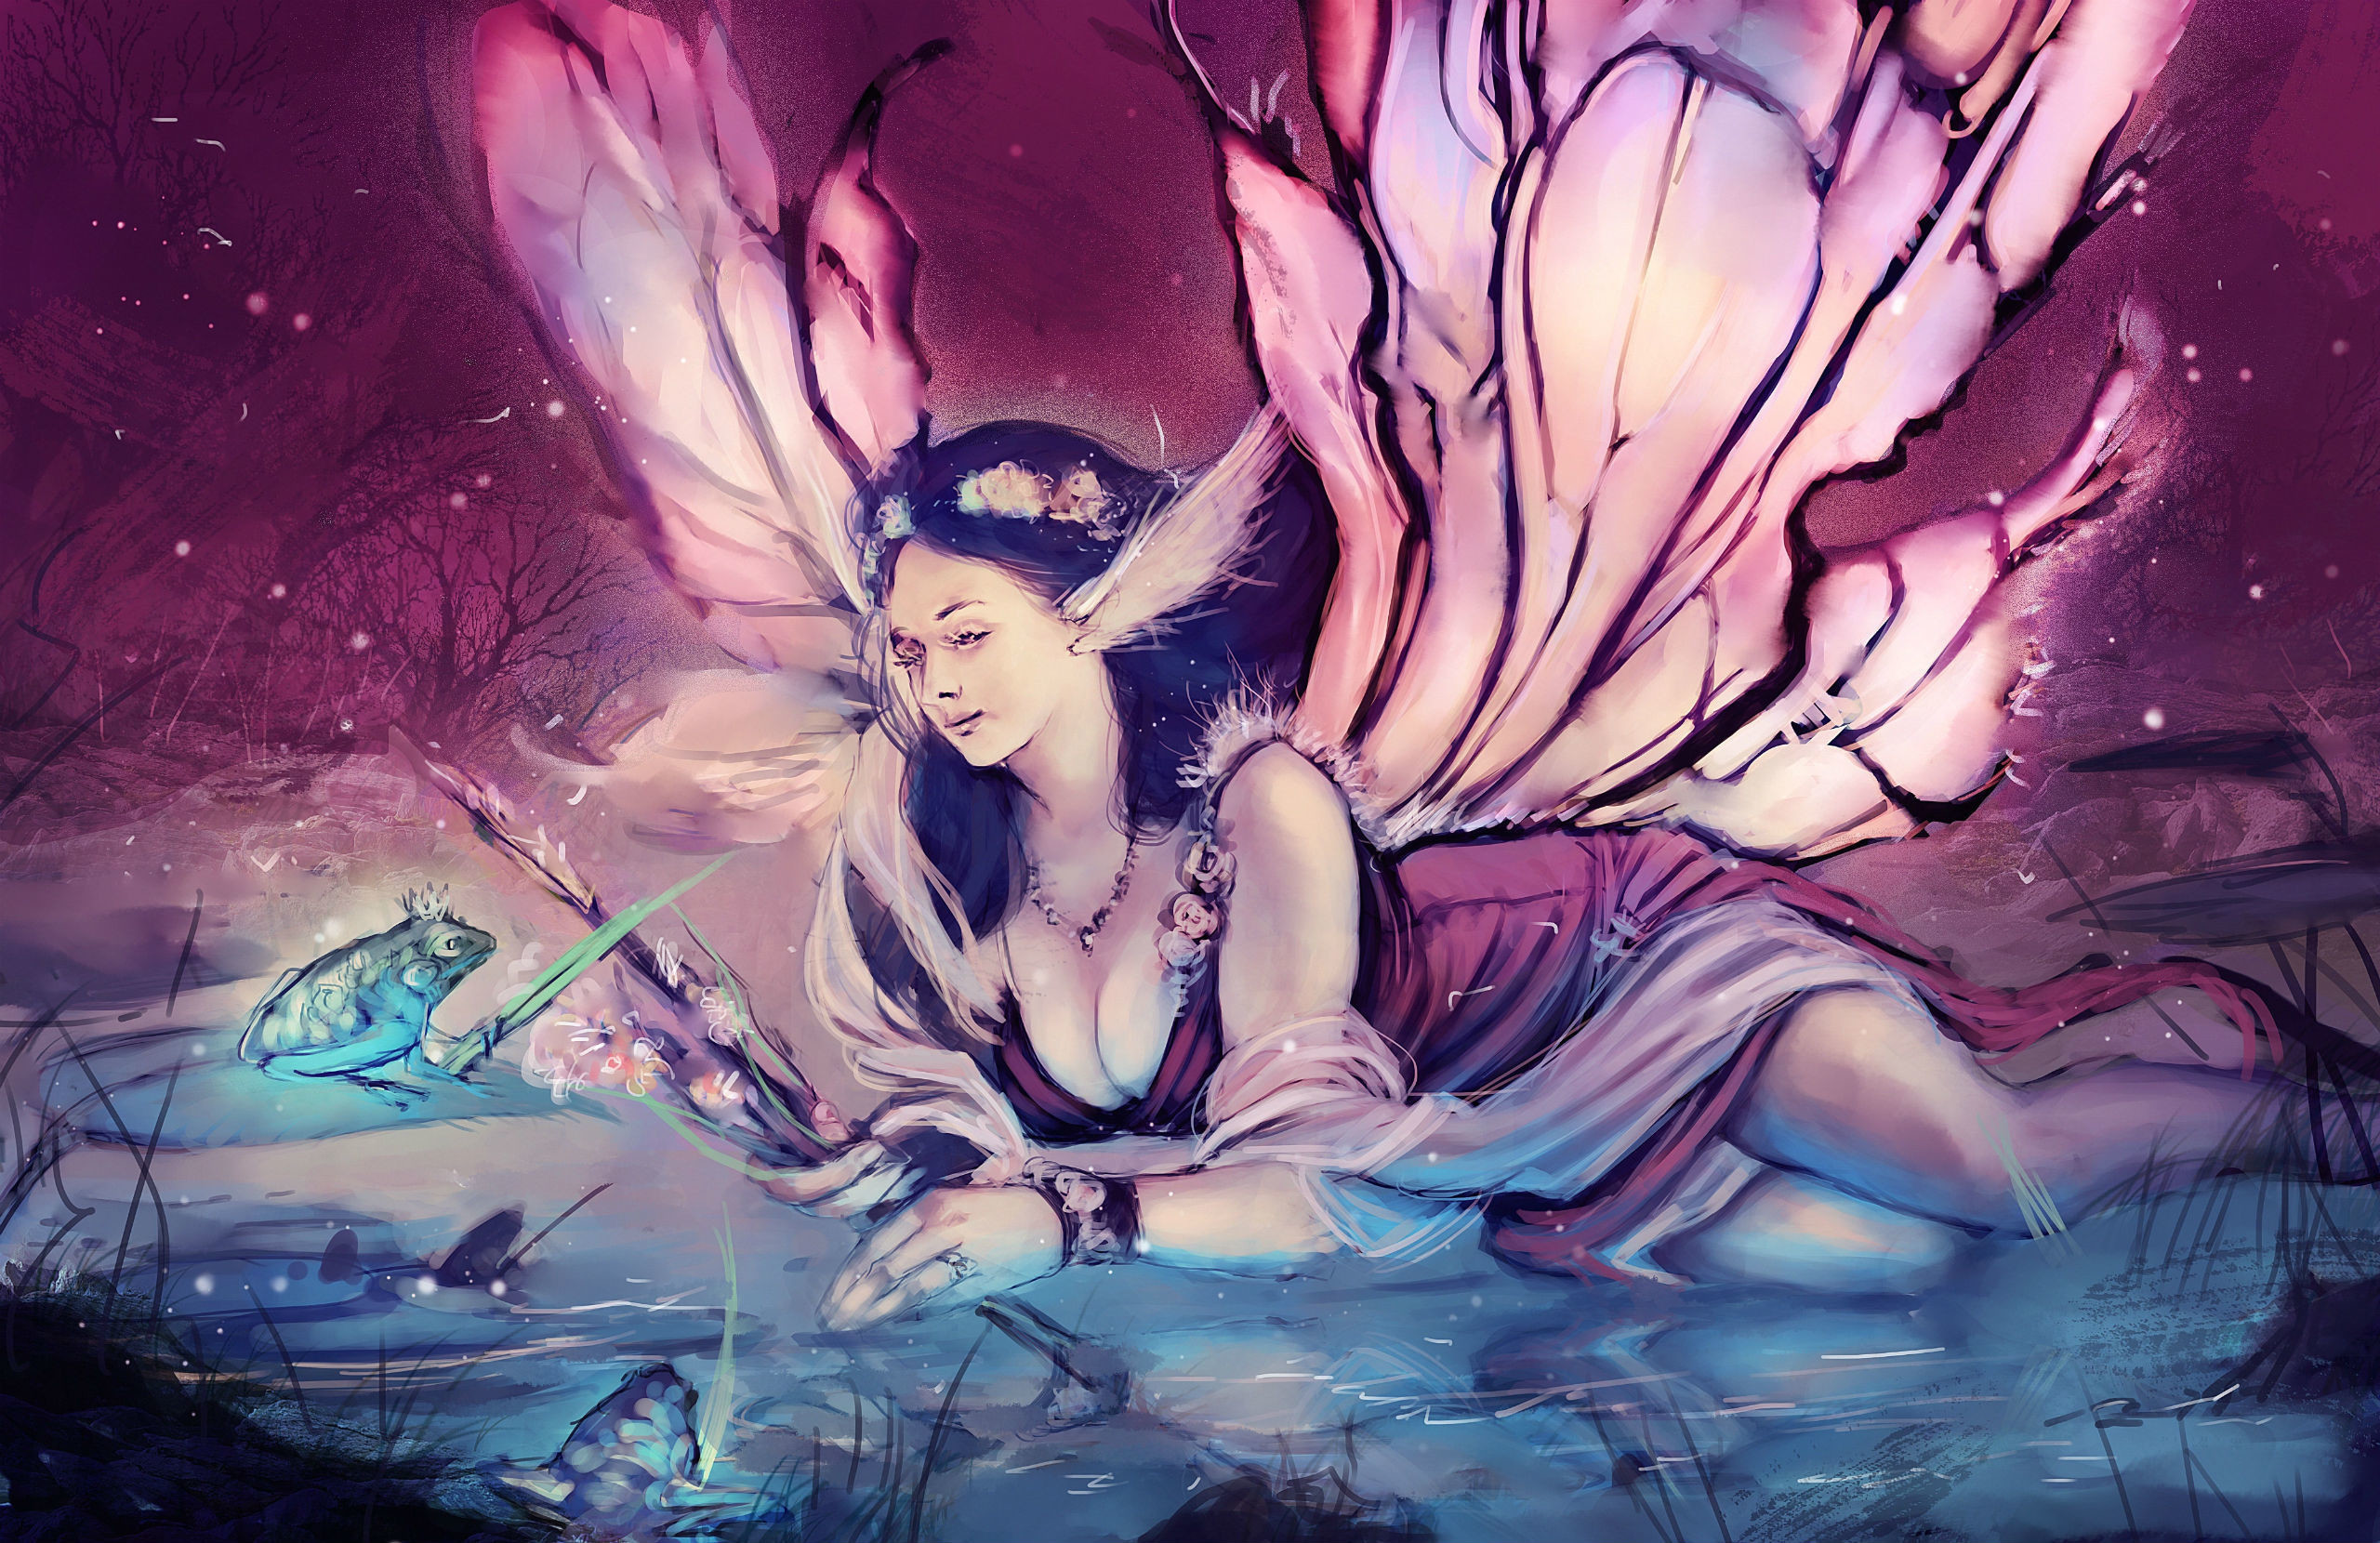 sexy fairies wallpaper